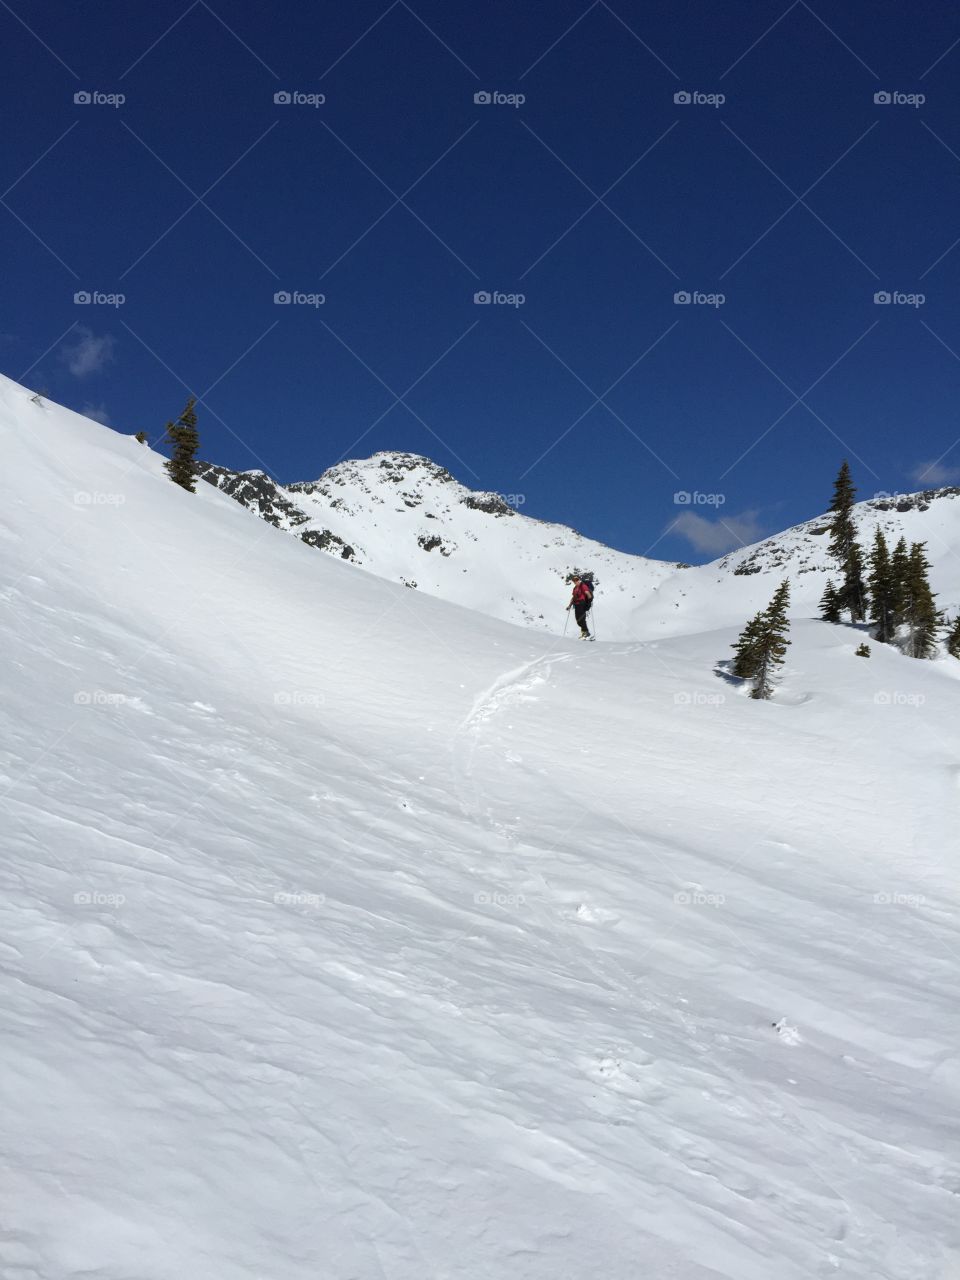 Snow, Winter, Cold, Mountain, Skier